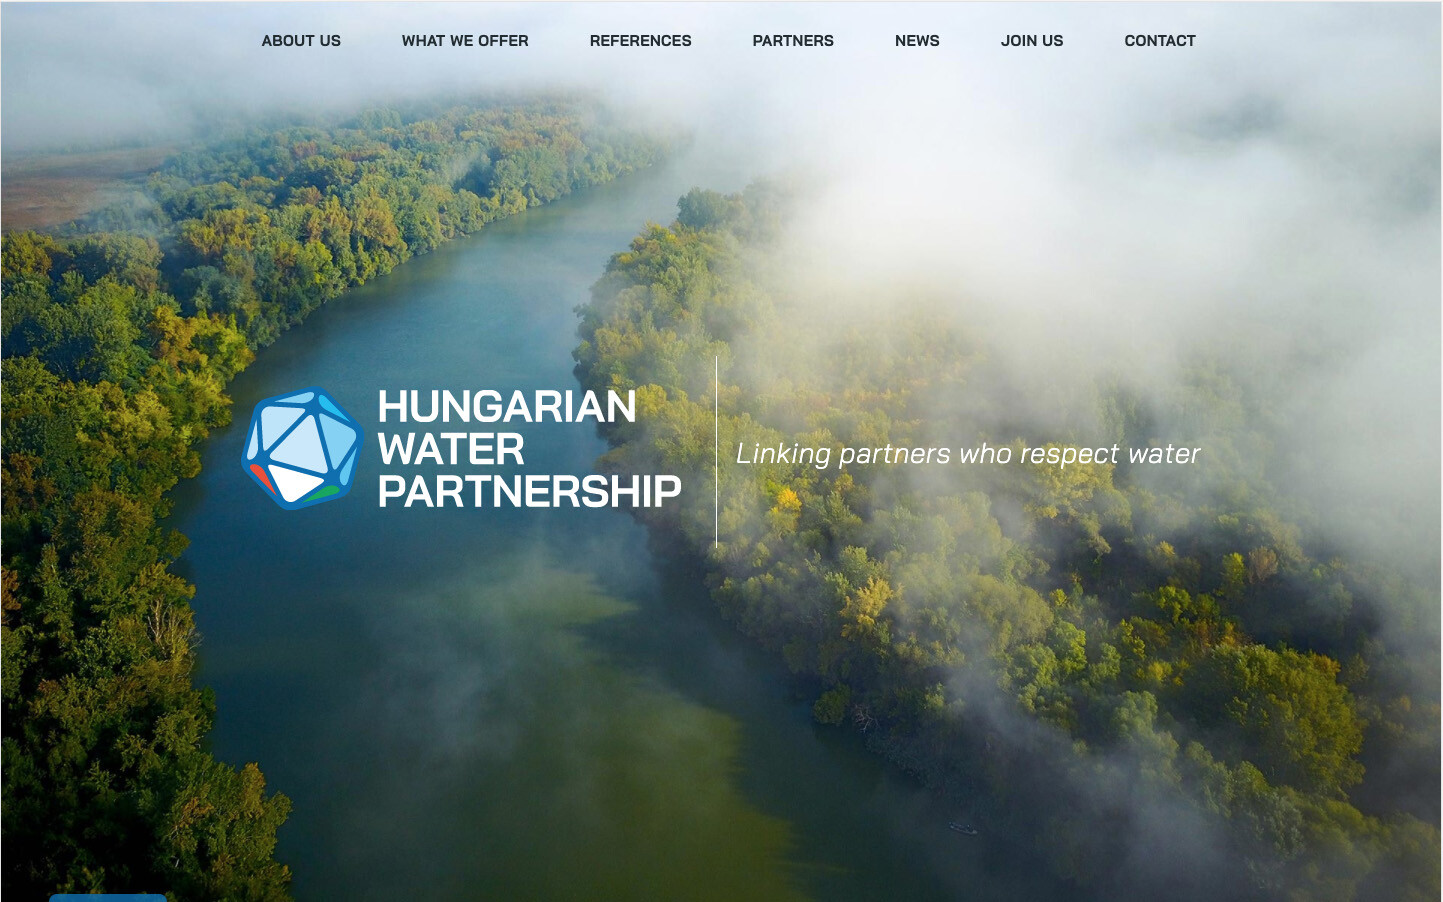 Hungarian Water Partnership